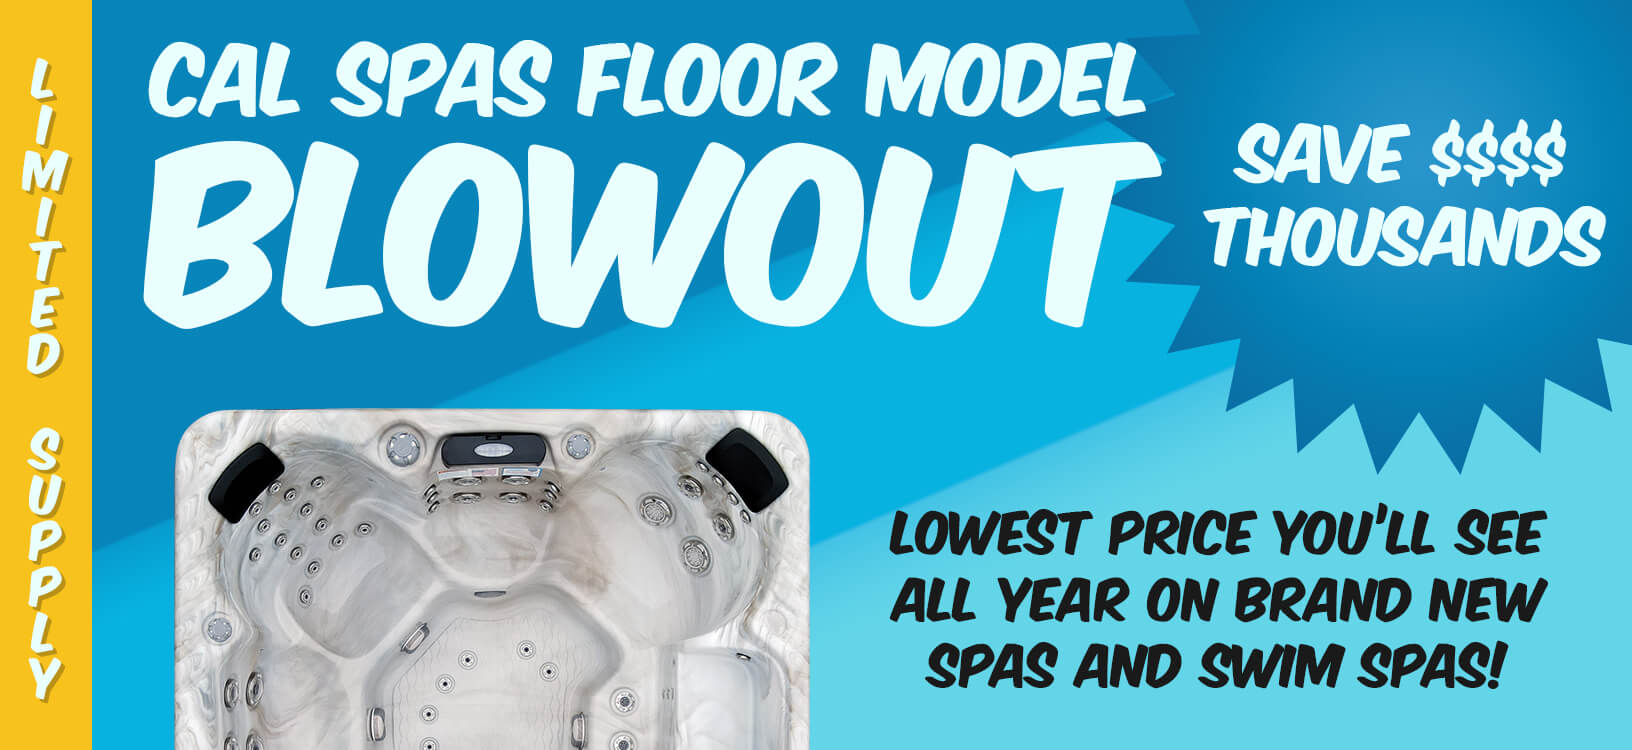 Floor Model Blowout banner for fair